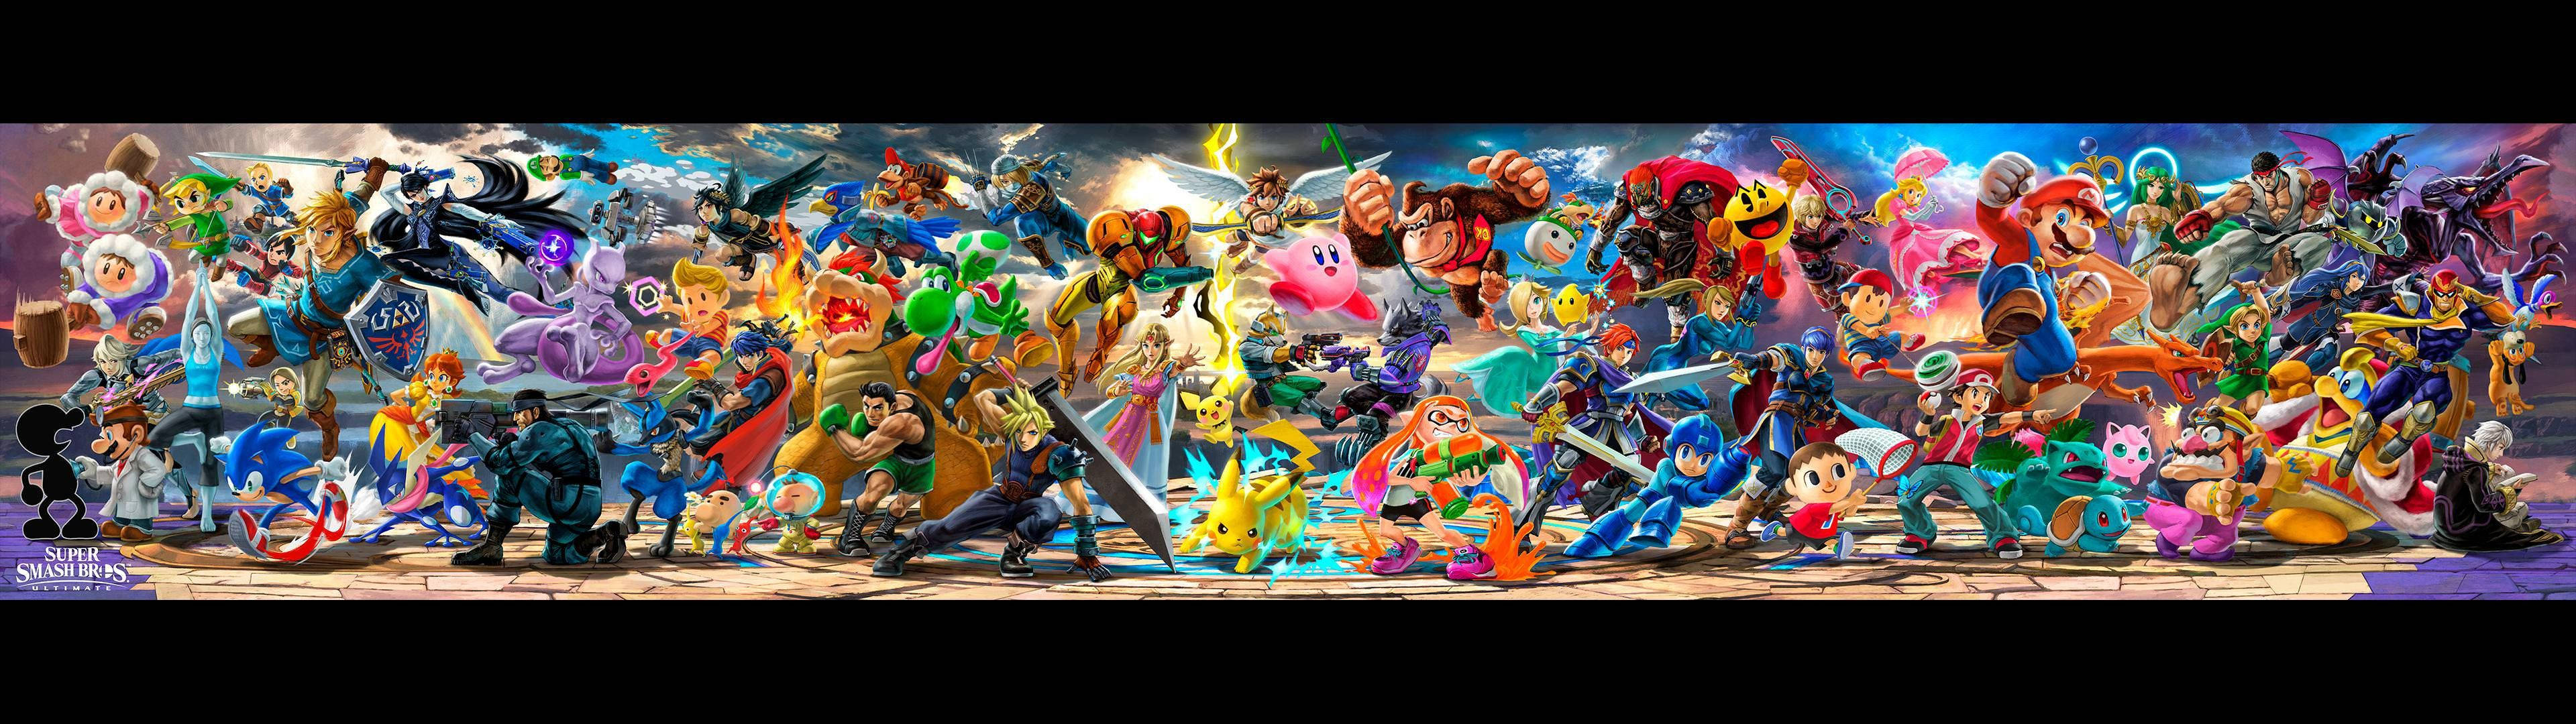 Super Smash Bros Ultimate – the ultimate battle Wallpaper